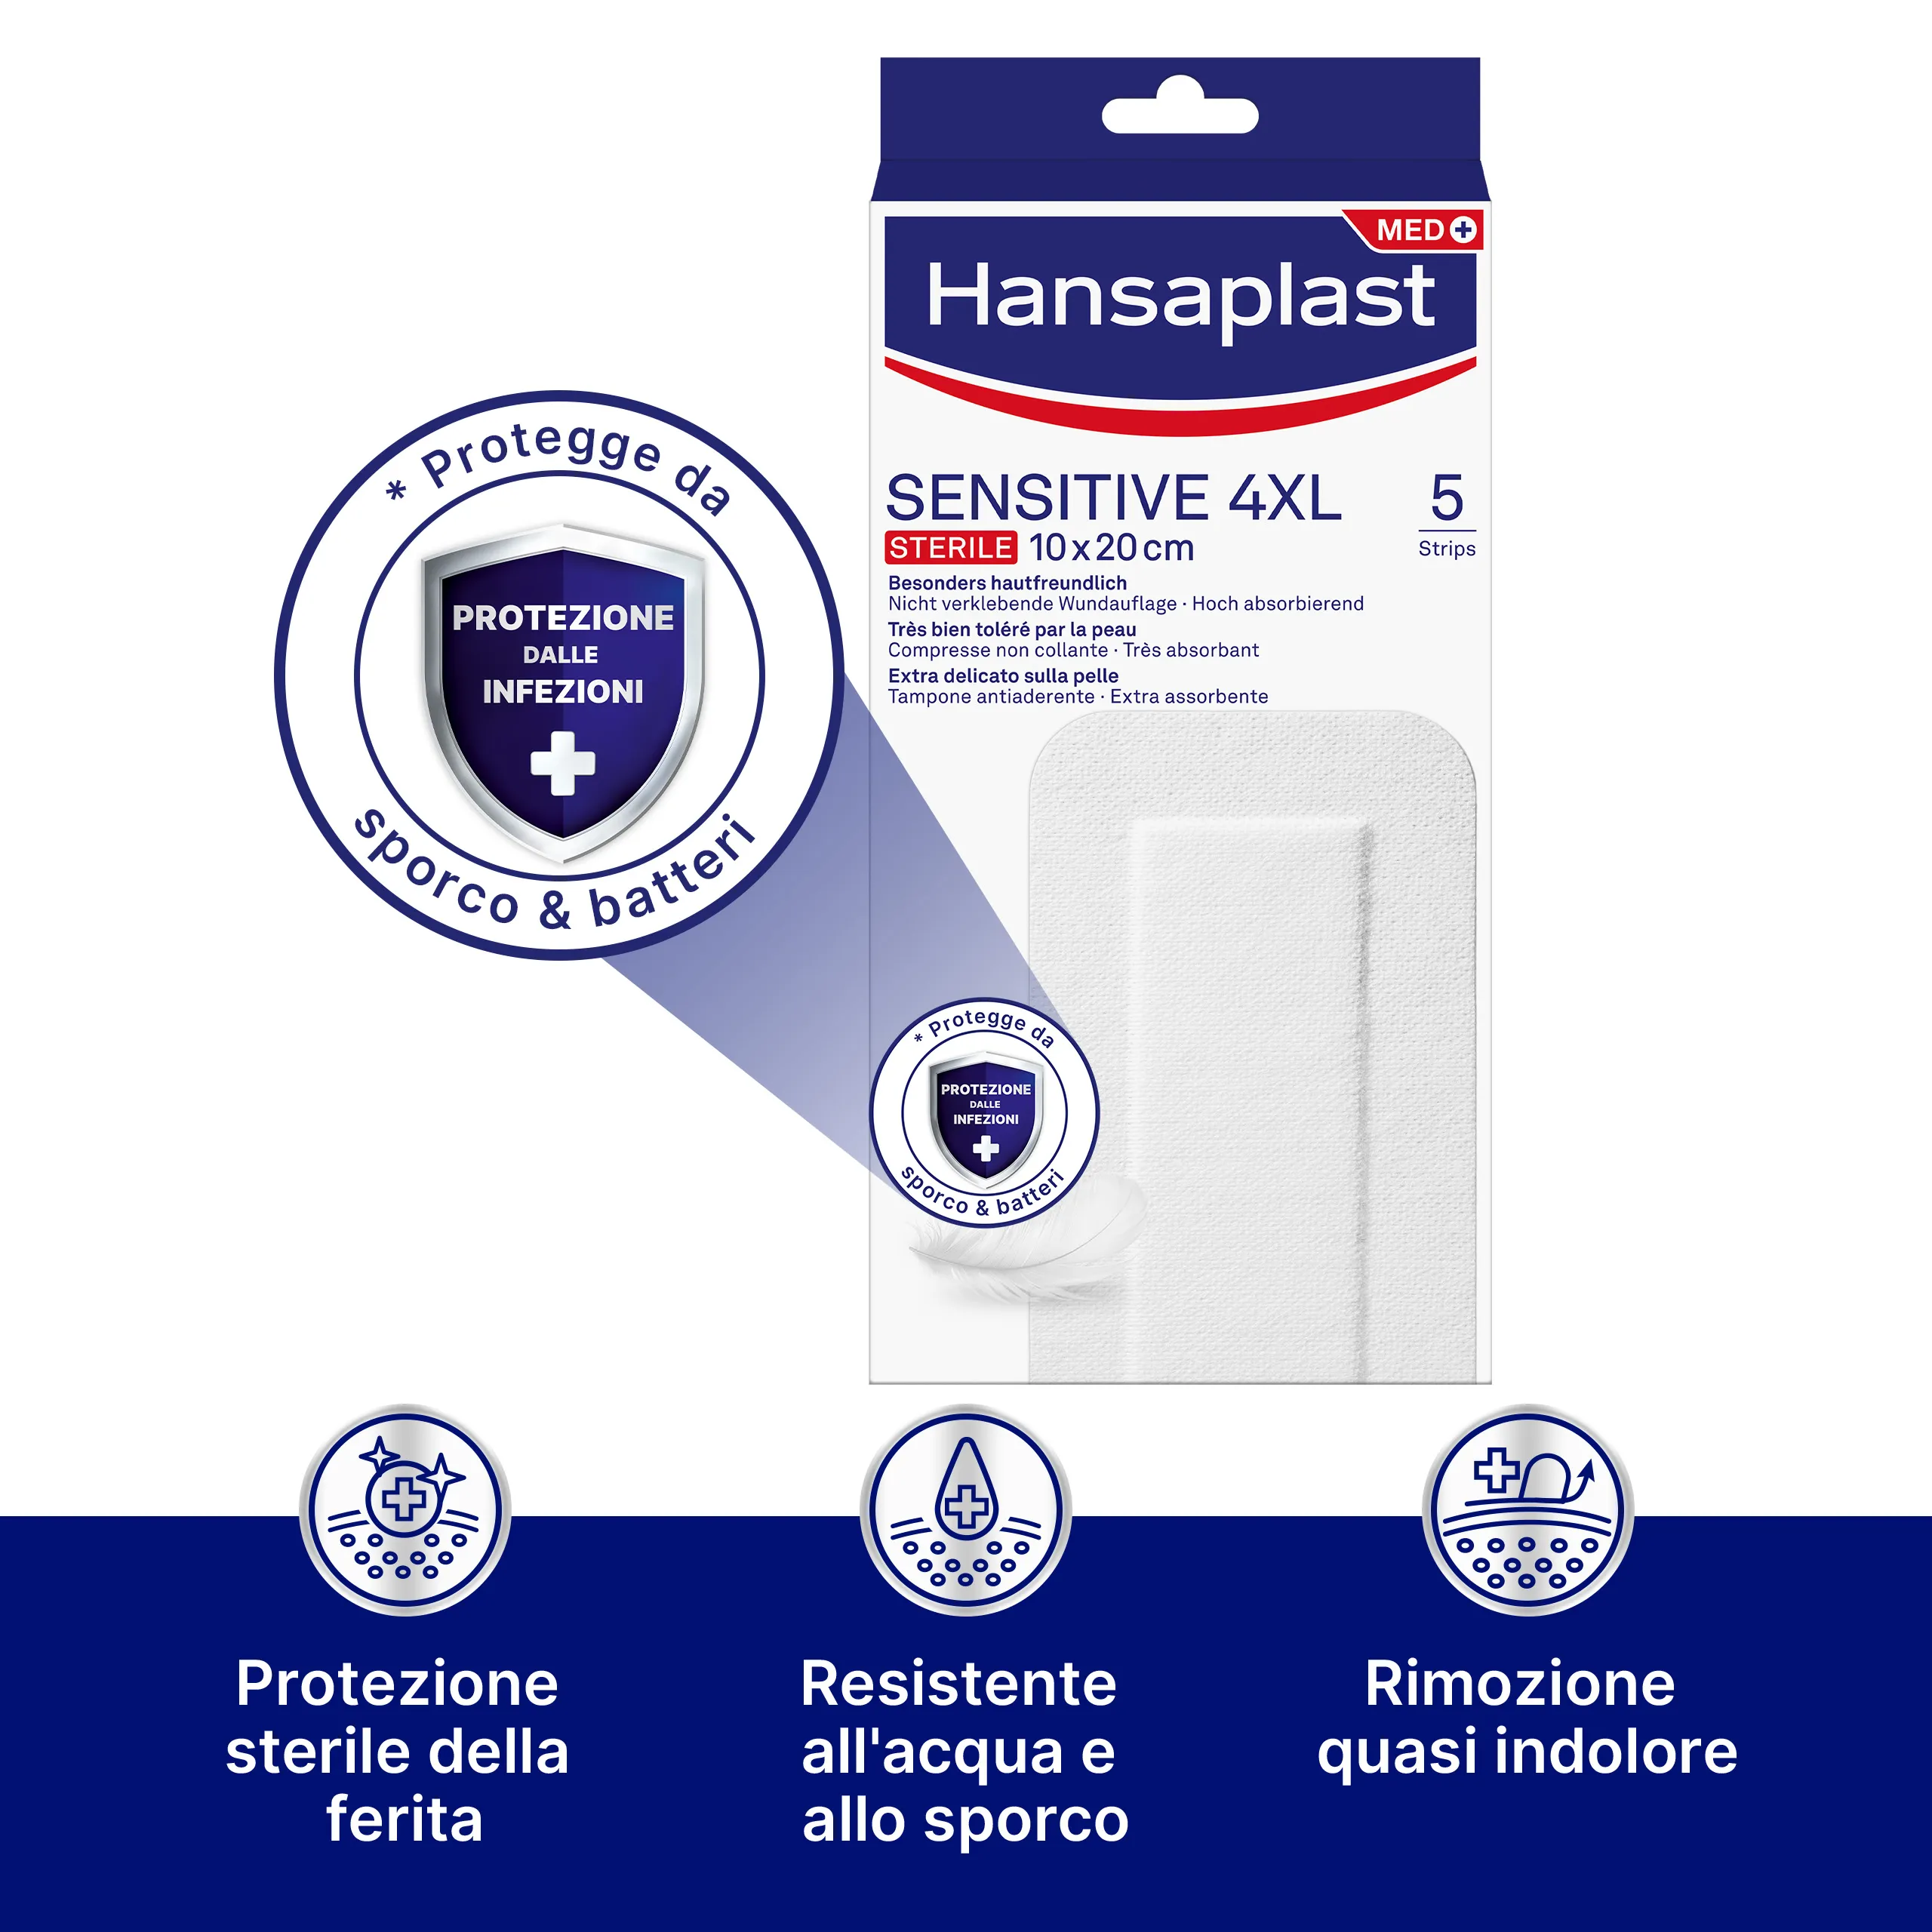 Hansaplast Sensitive 4XL 10x20 cm 5 Strips Sterile